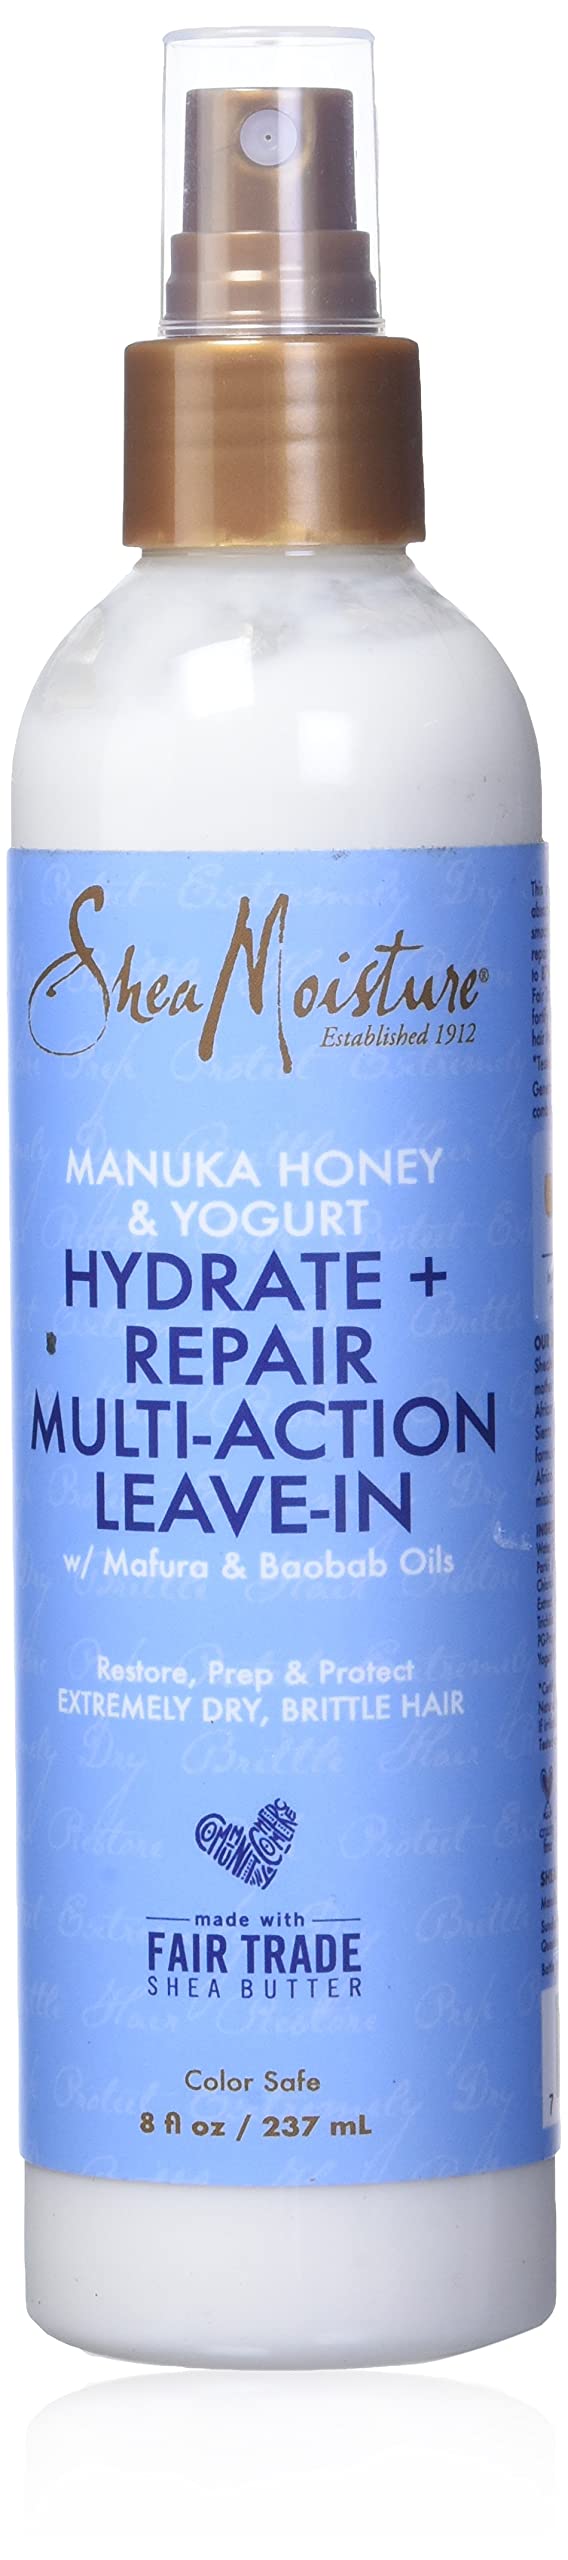 SHEA MOISTURE Manuka Honey and Yogurt Hydrate Plus Multi-Action Leave-Insex Treatment, 8 Ounce